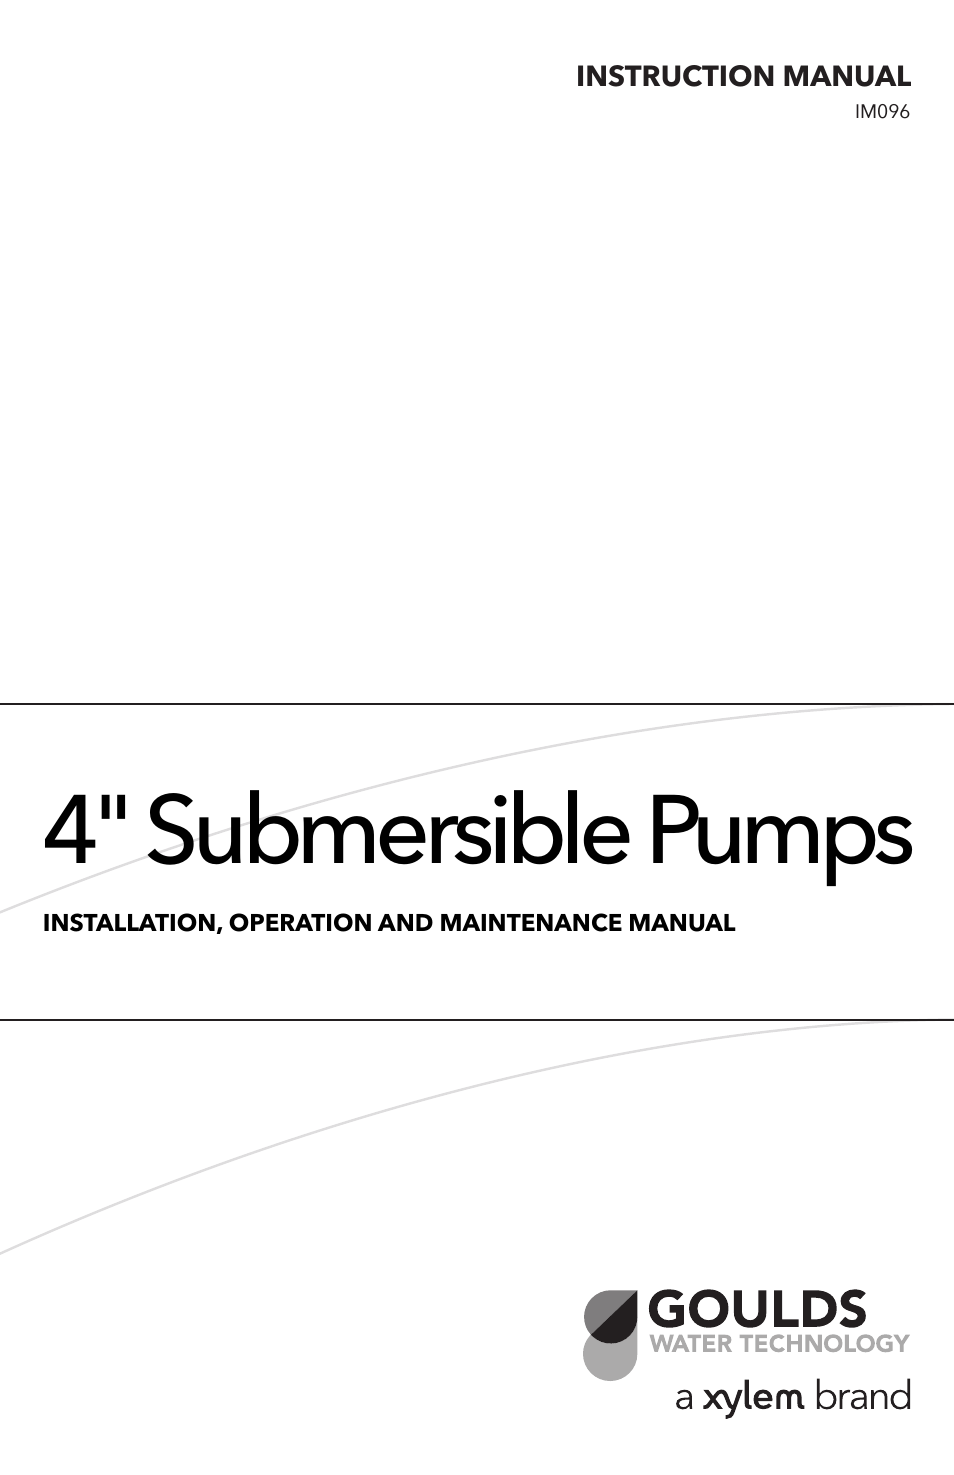 IM096 R07 4 Submersible Pumps